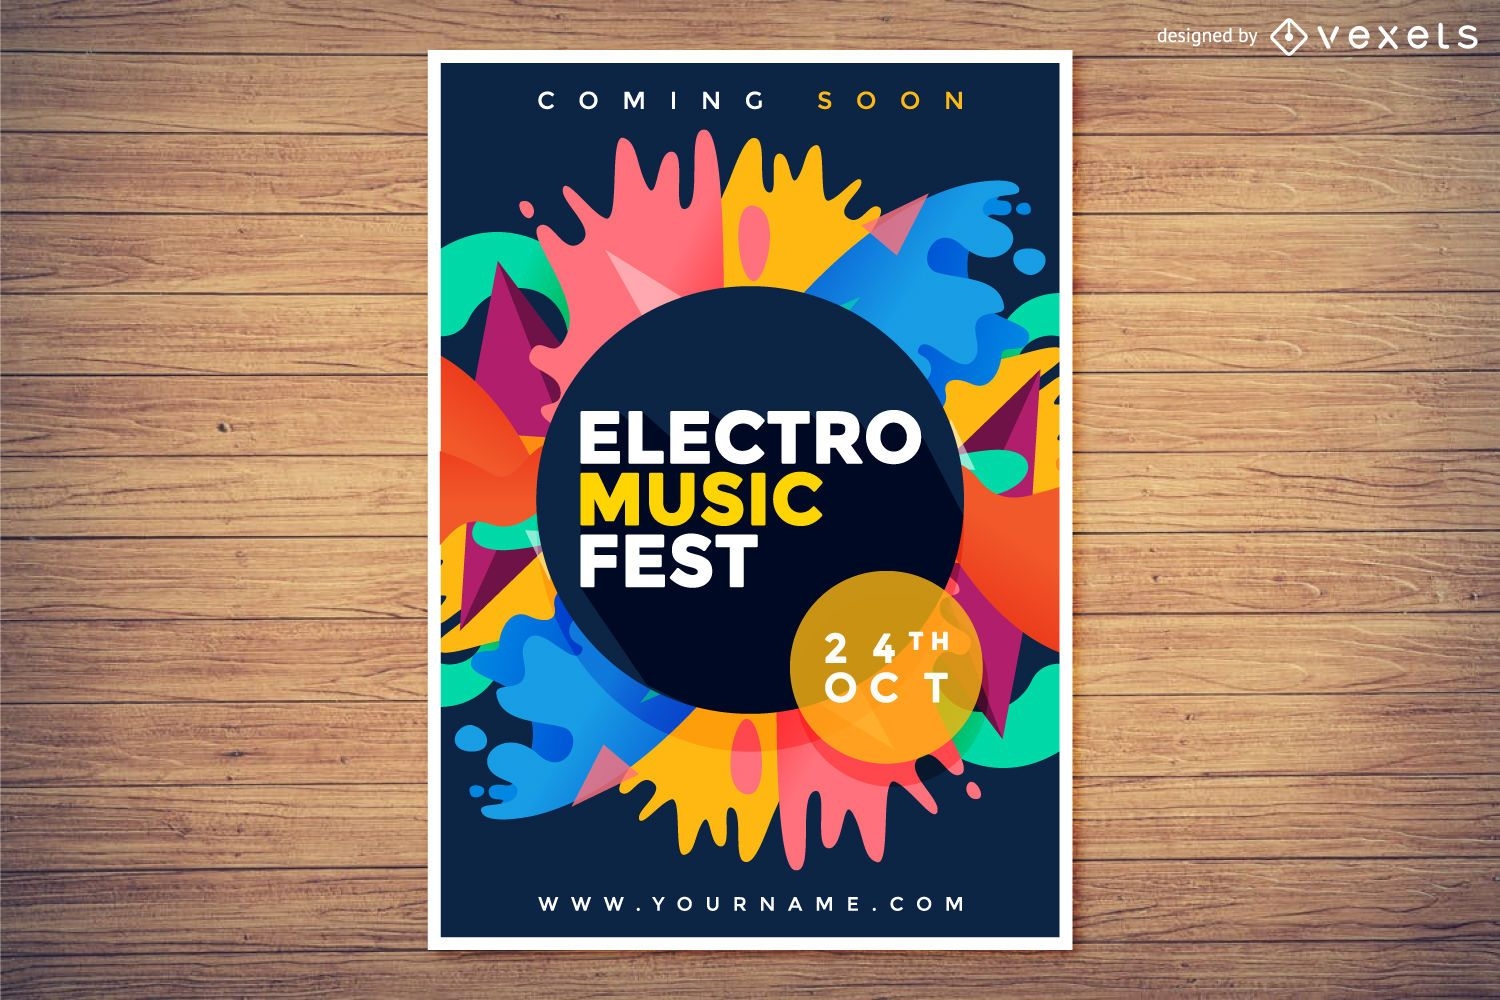 Electro music festival poster